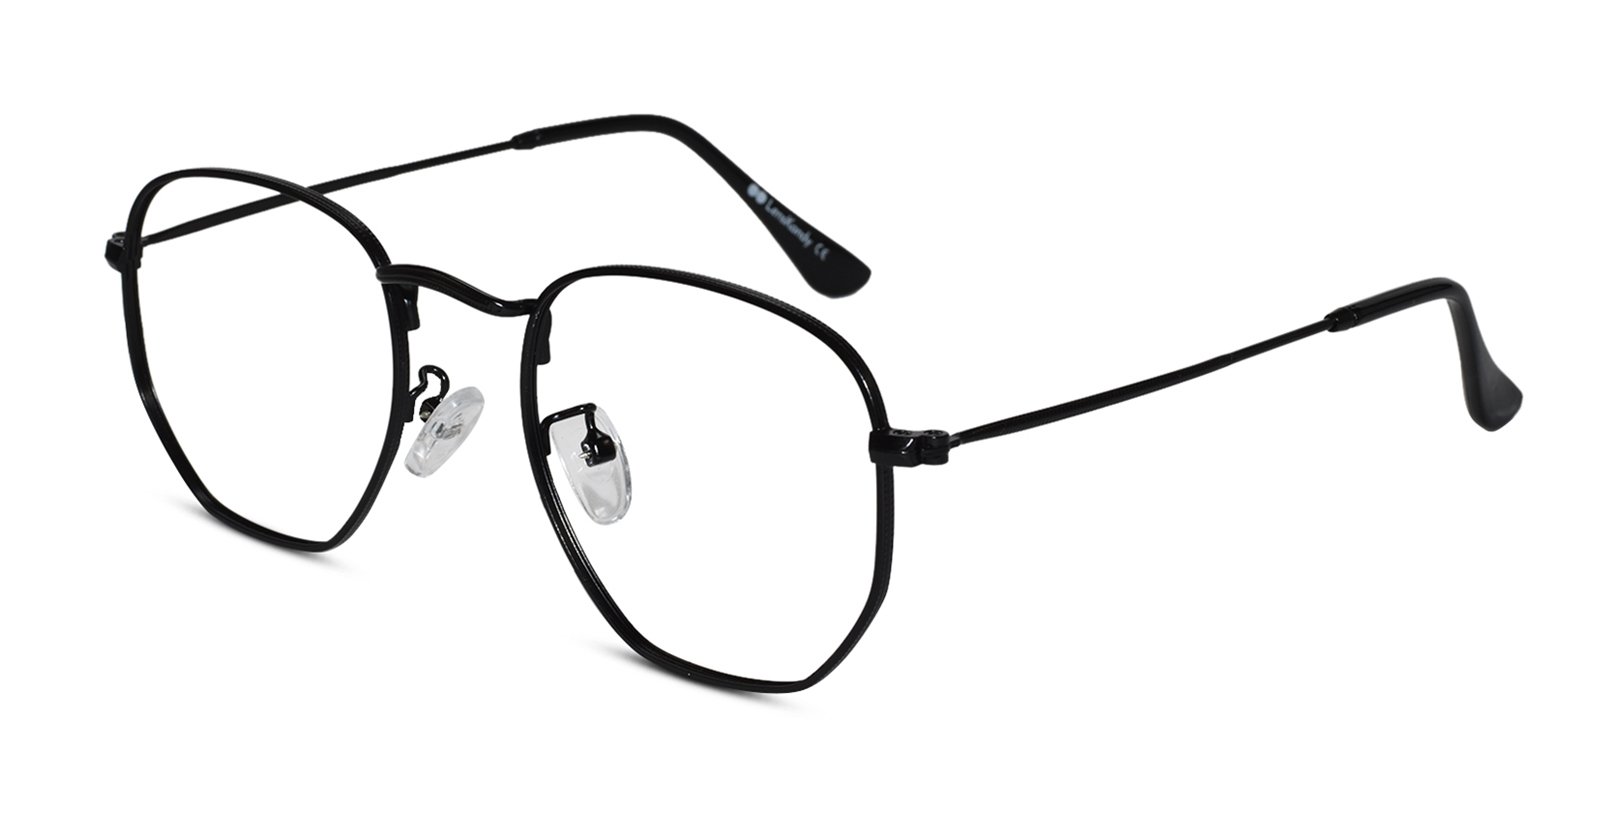 Black hexagonal sleek eyeglasses